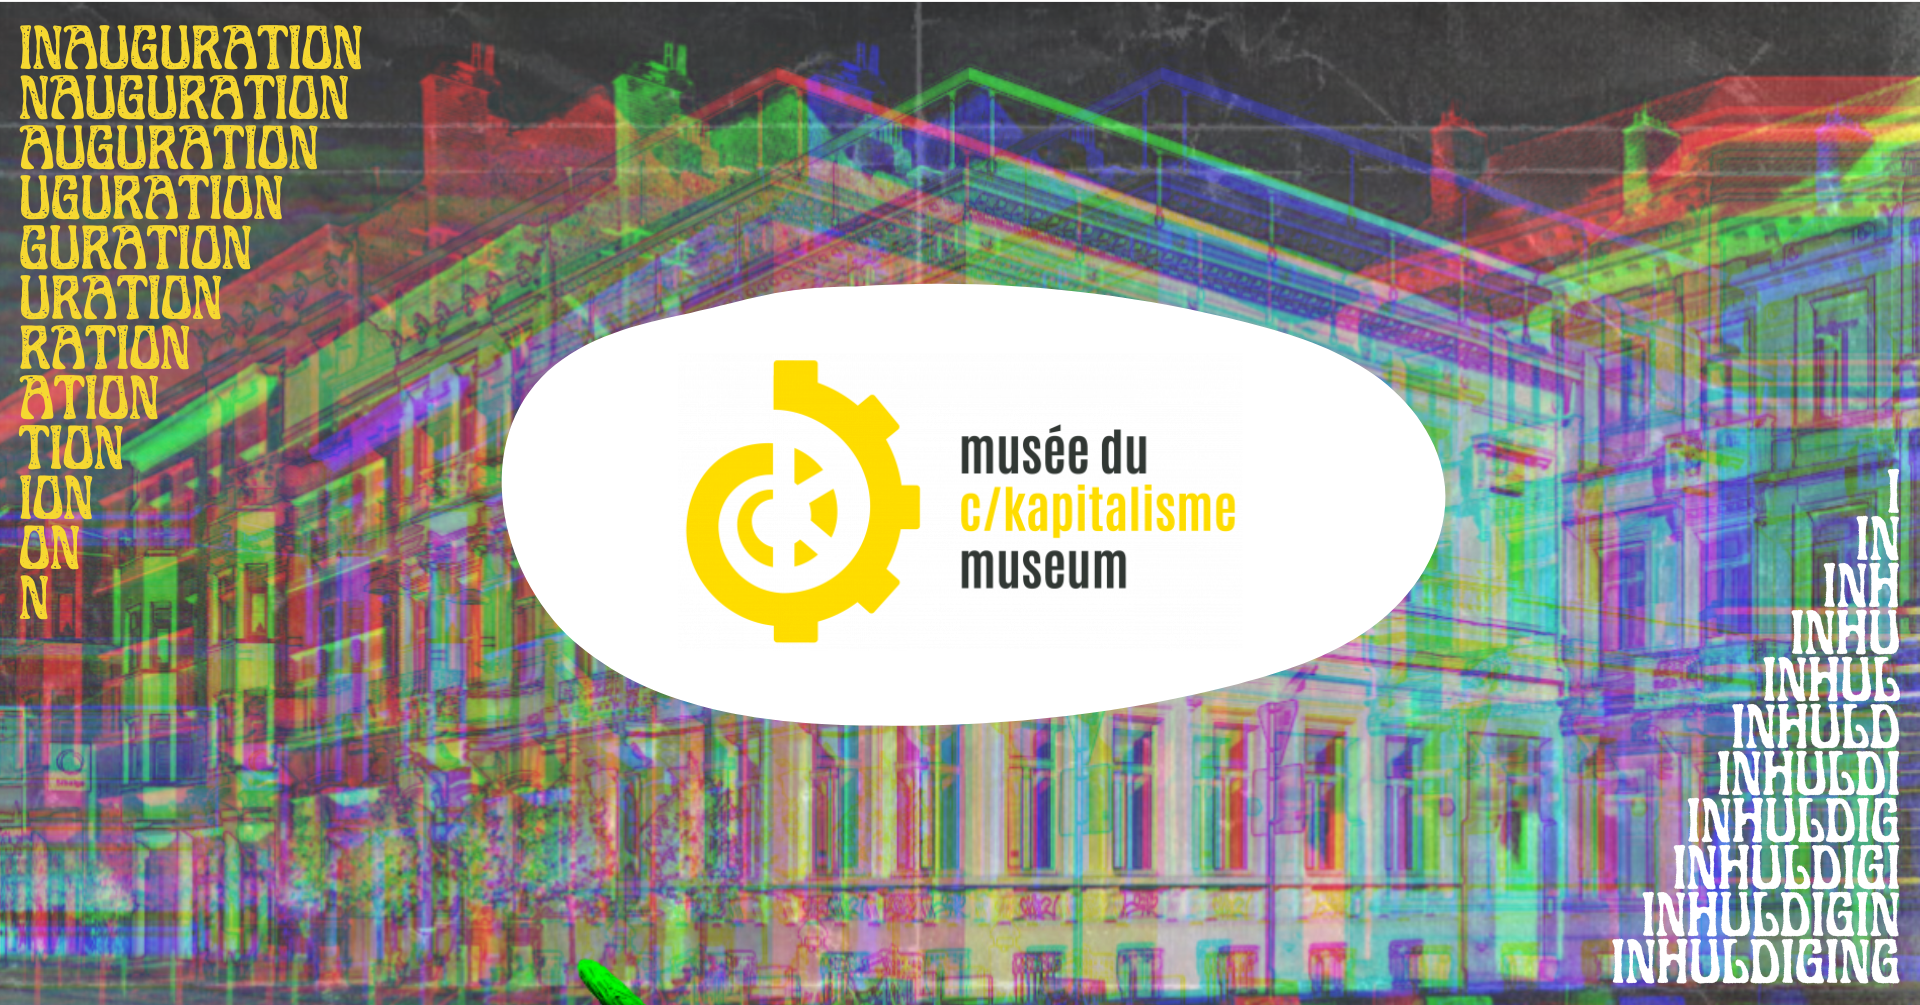 Opening Museum of Capitalism